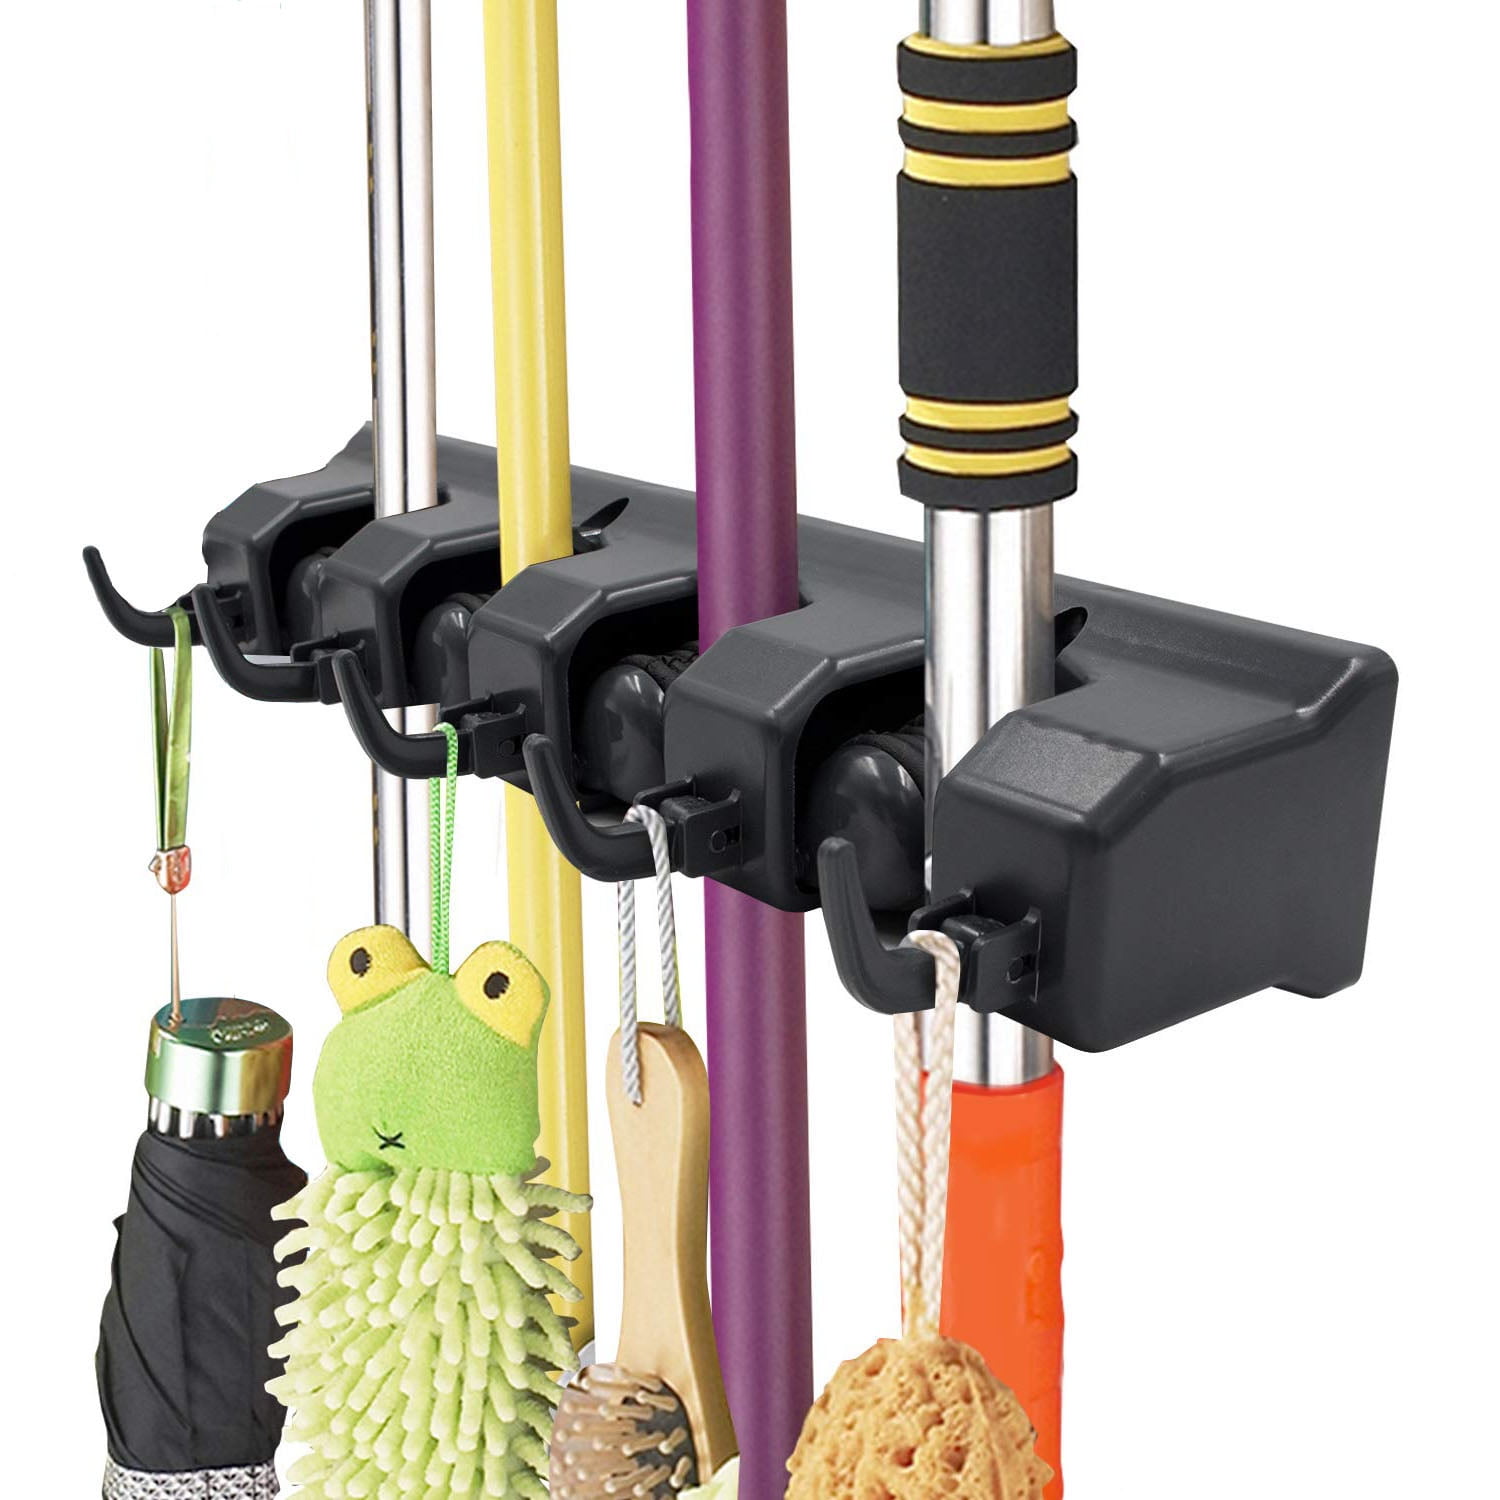 1x Hangers Mop Holder Mop Broom Wall Mounted Organizer Hooks Kit Sale Hot K3M3 